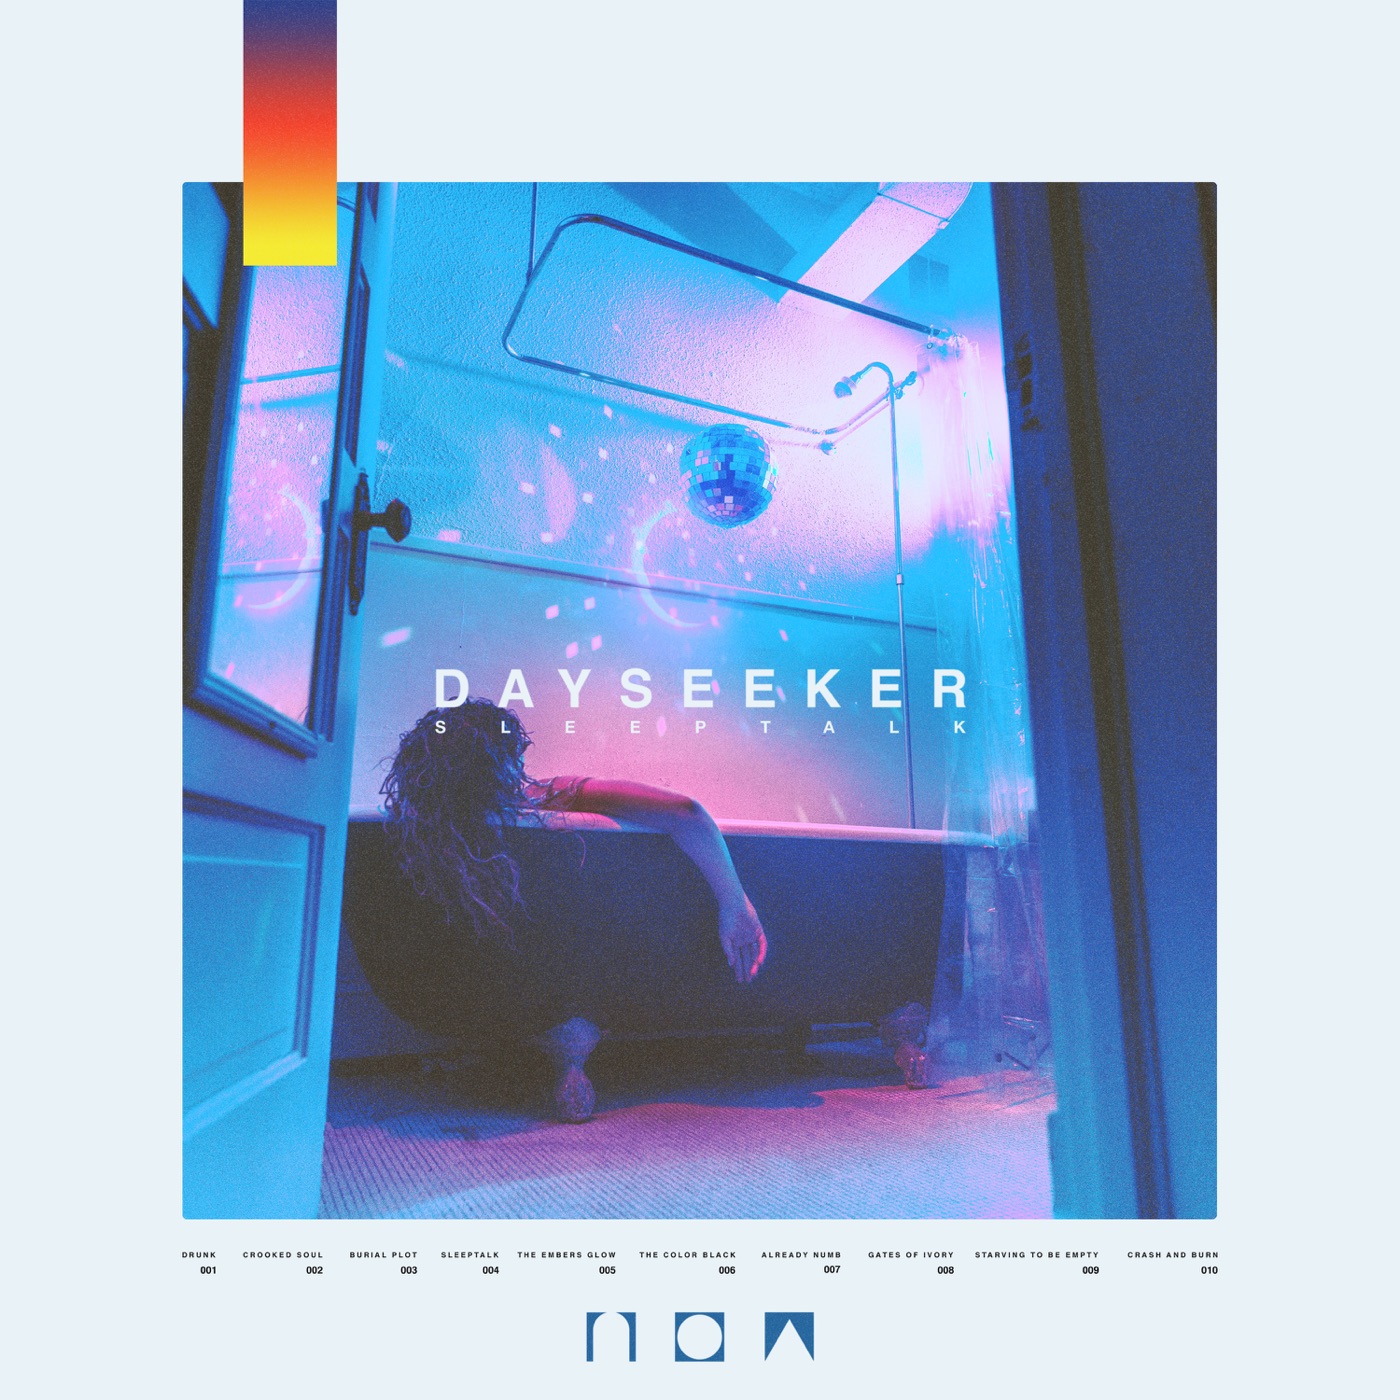 Dayseeker - Sleeptalk (2019)